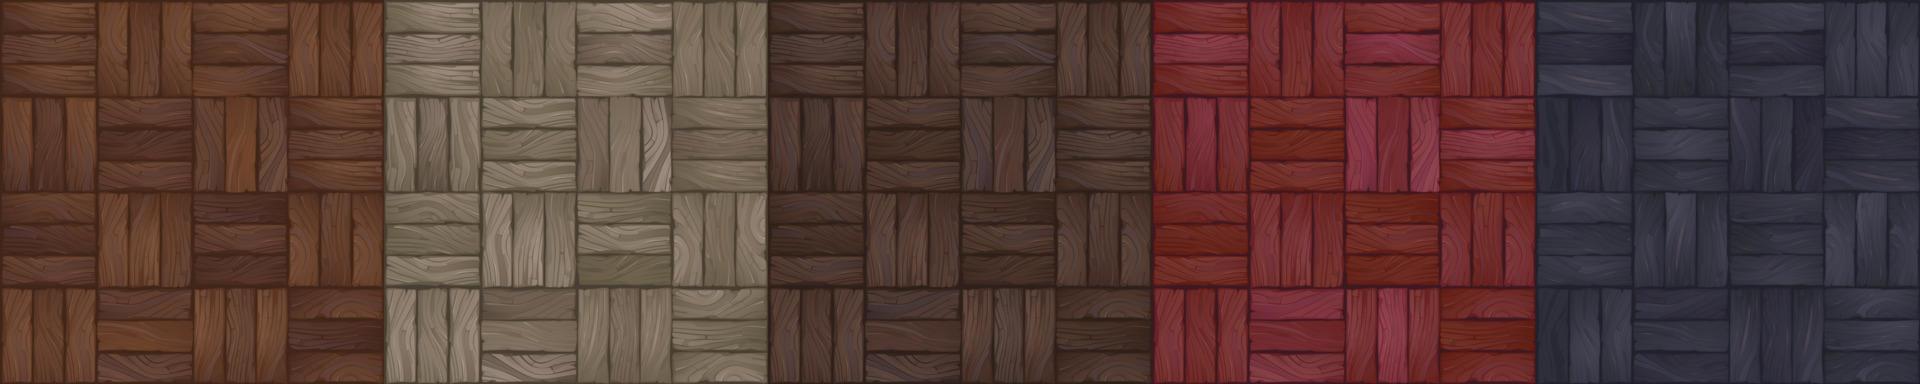 Texturen aus Farbholzparkett, Holzboden vektor